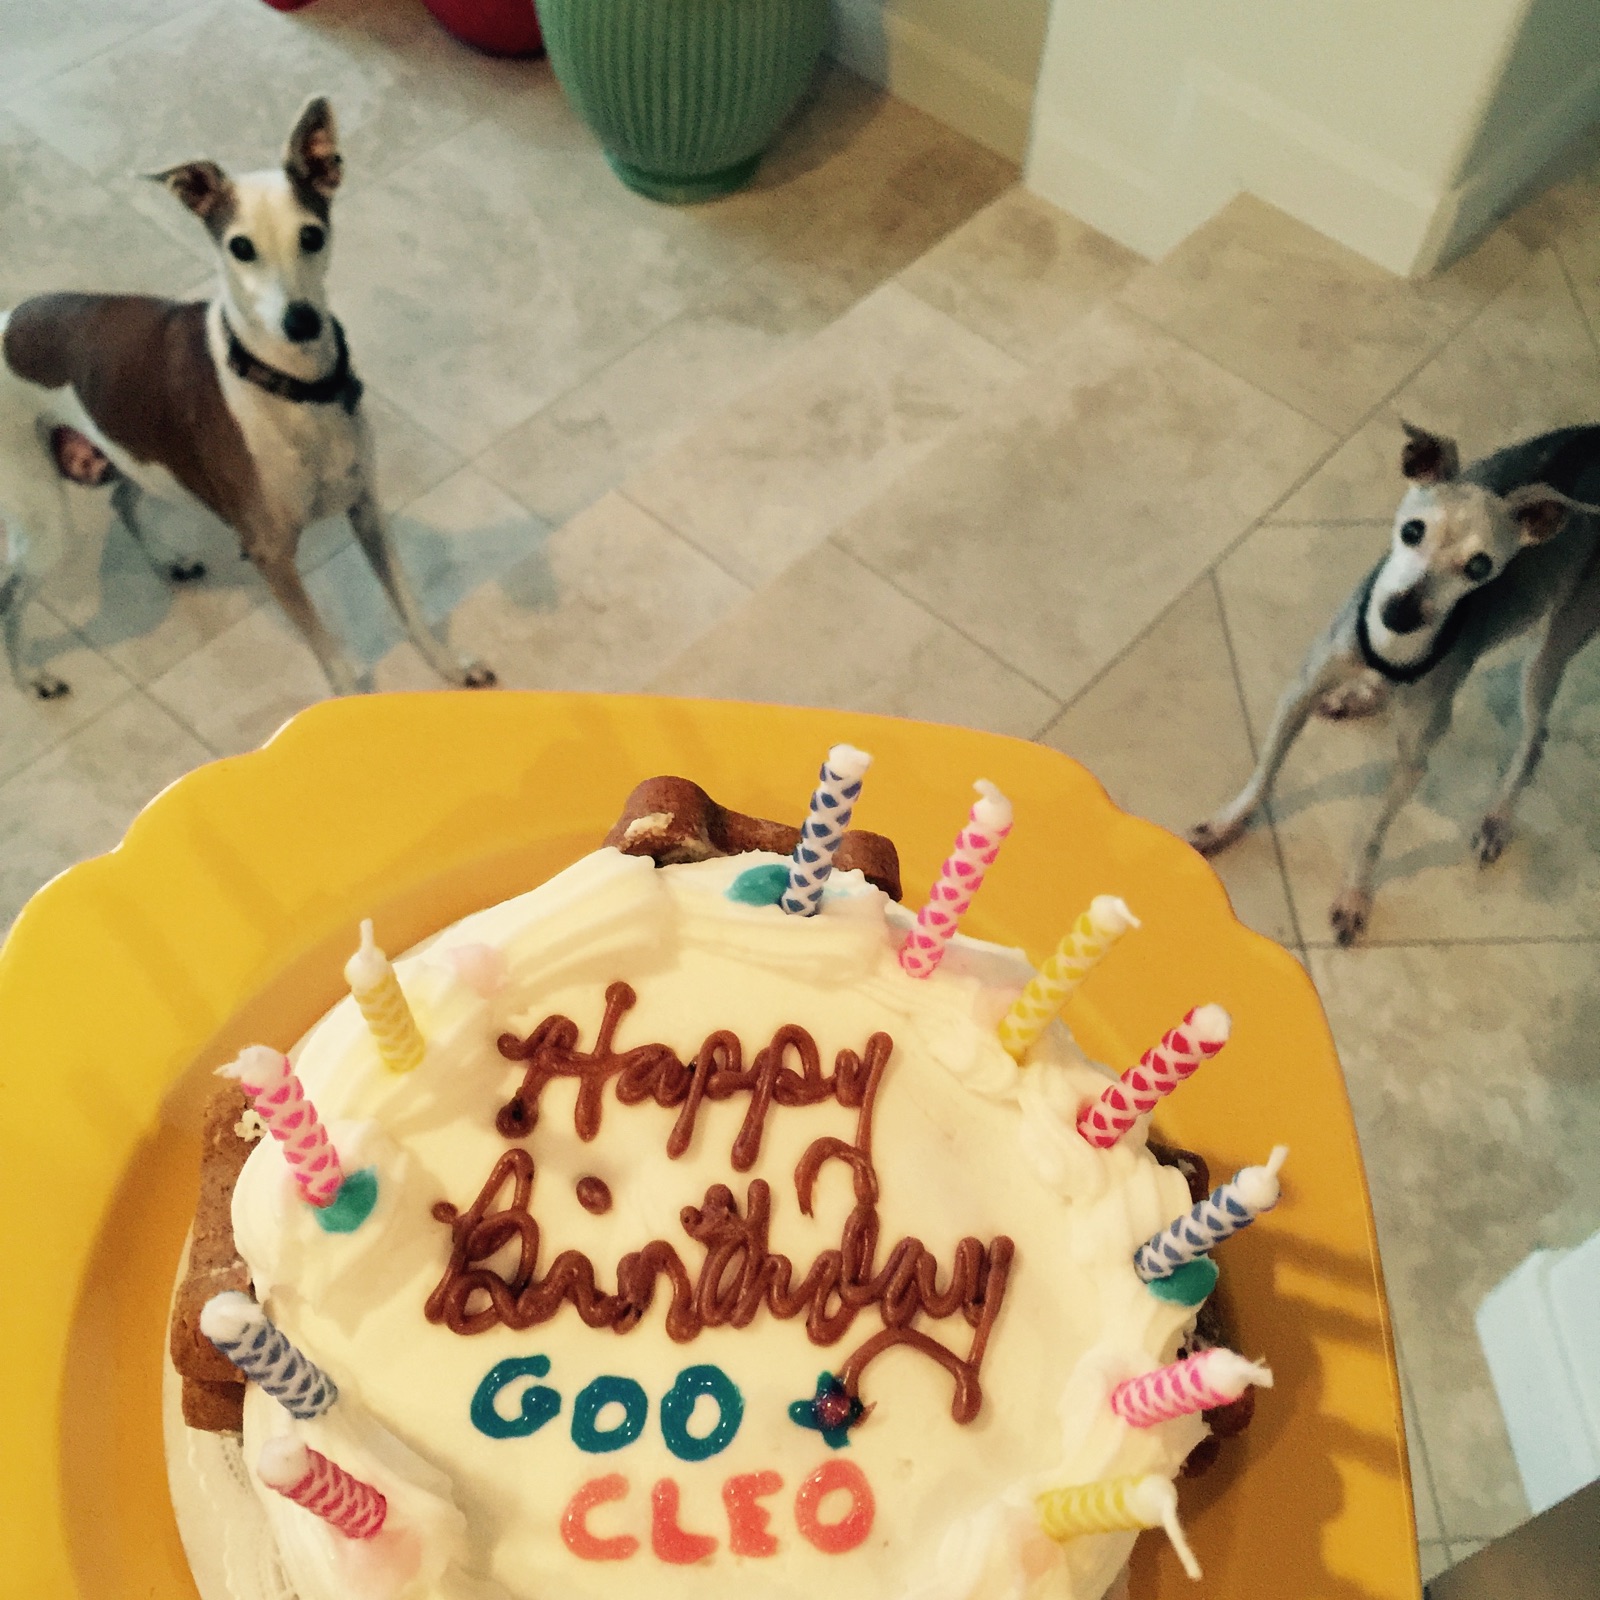 happy bday cake goo cleo.JPG